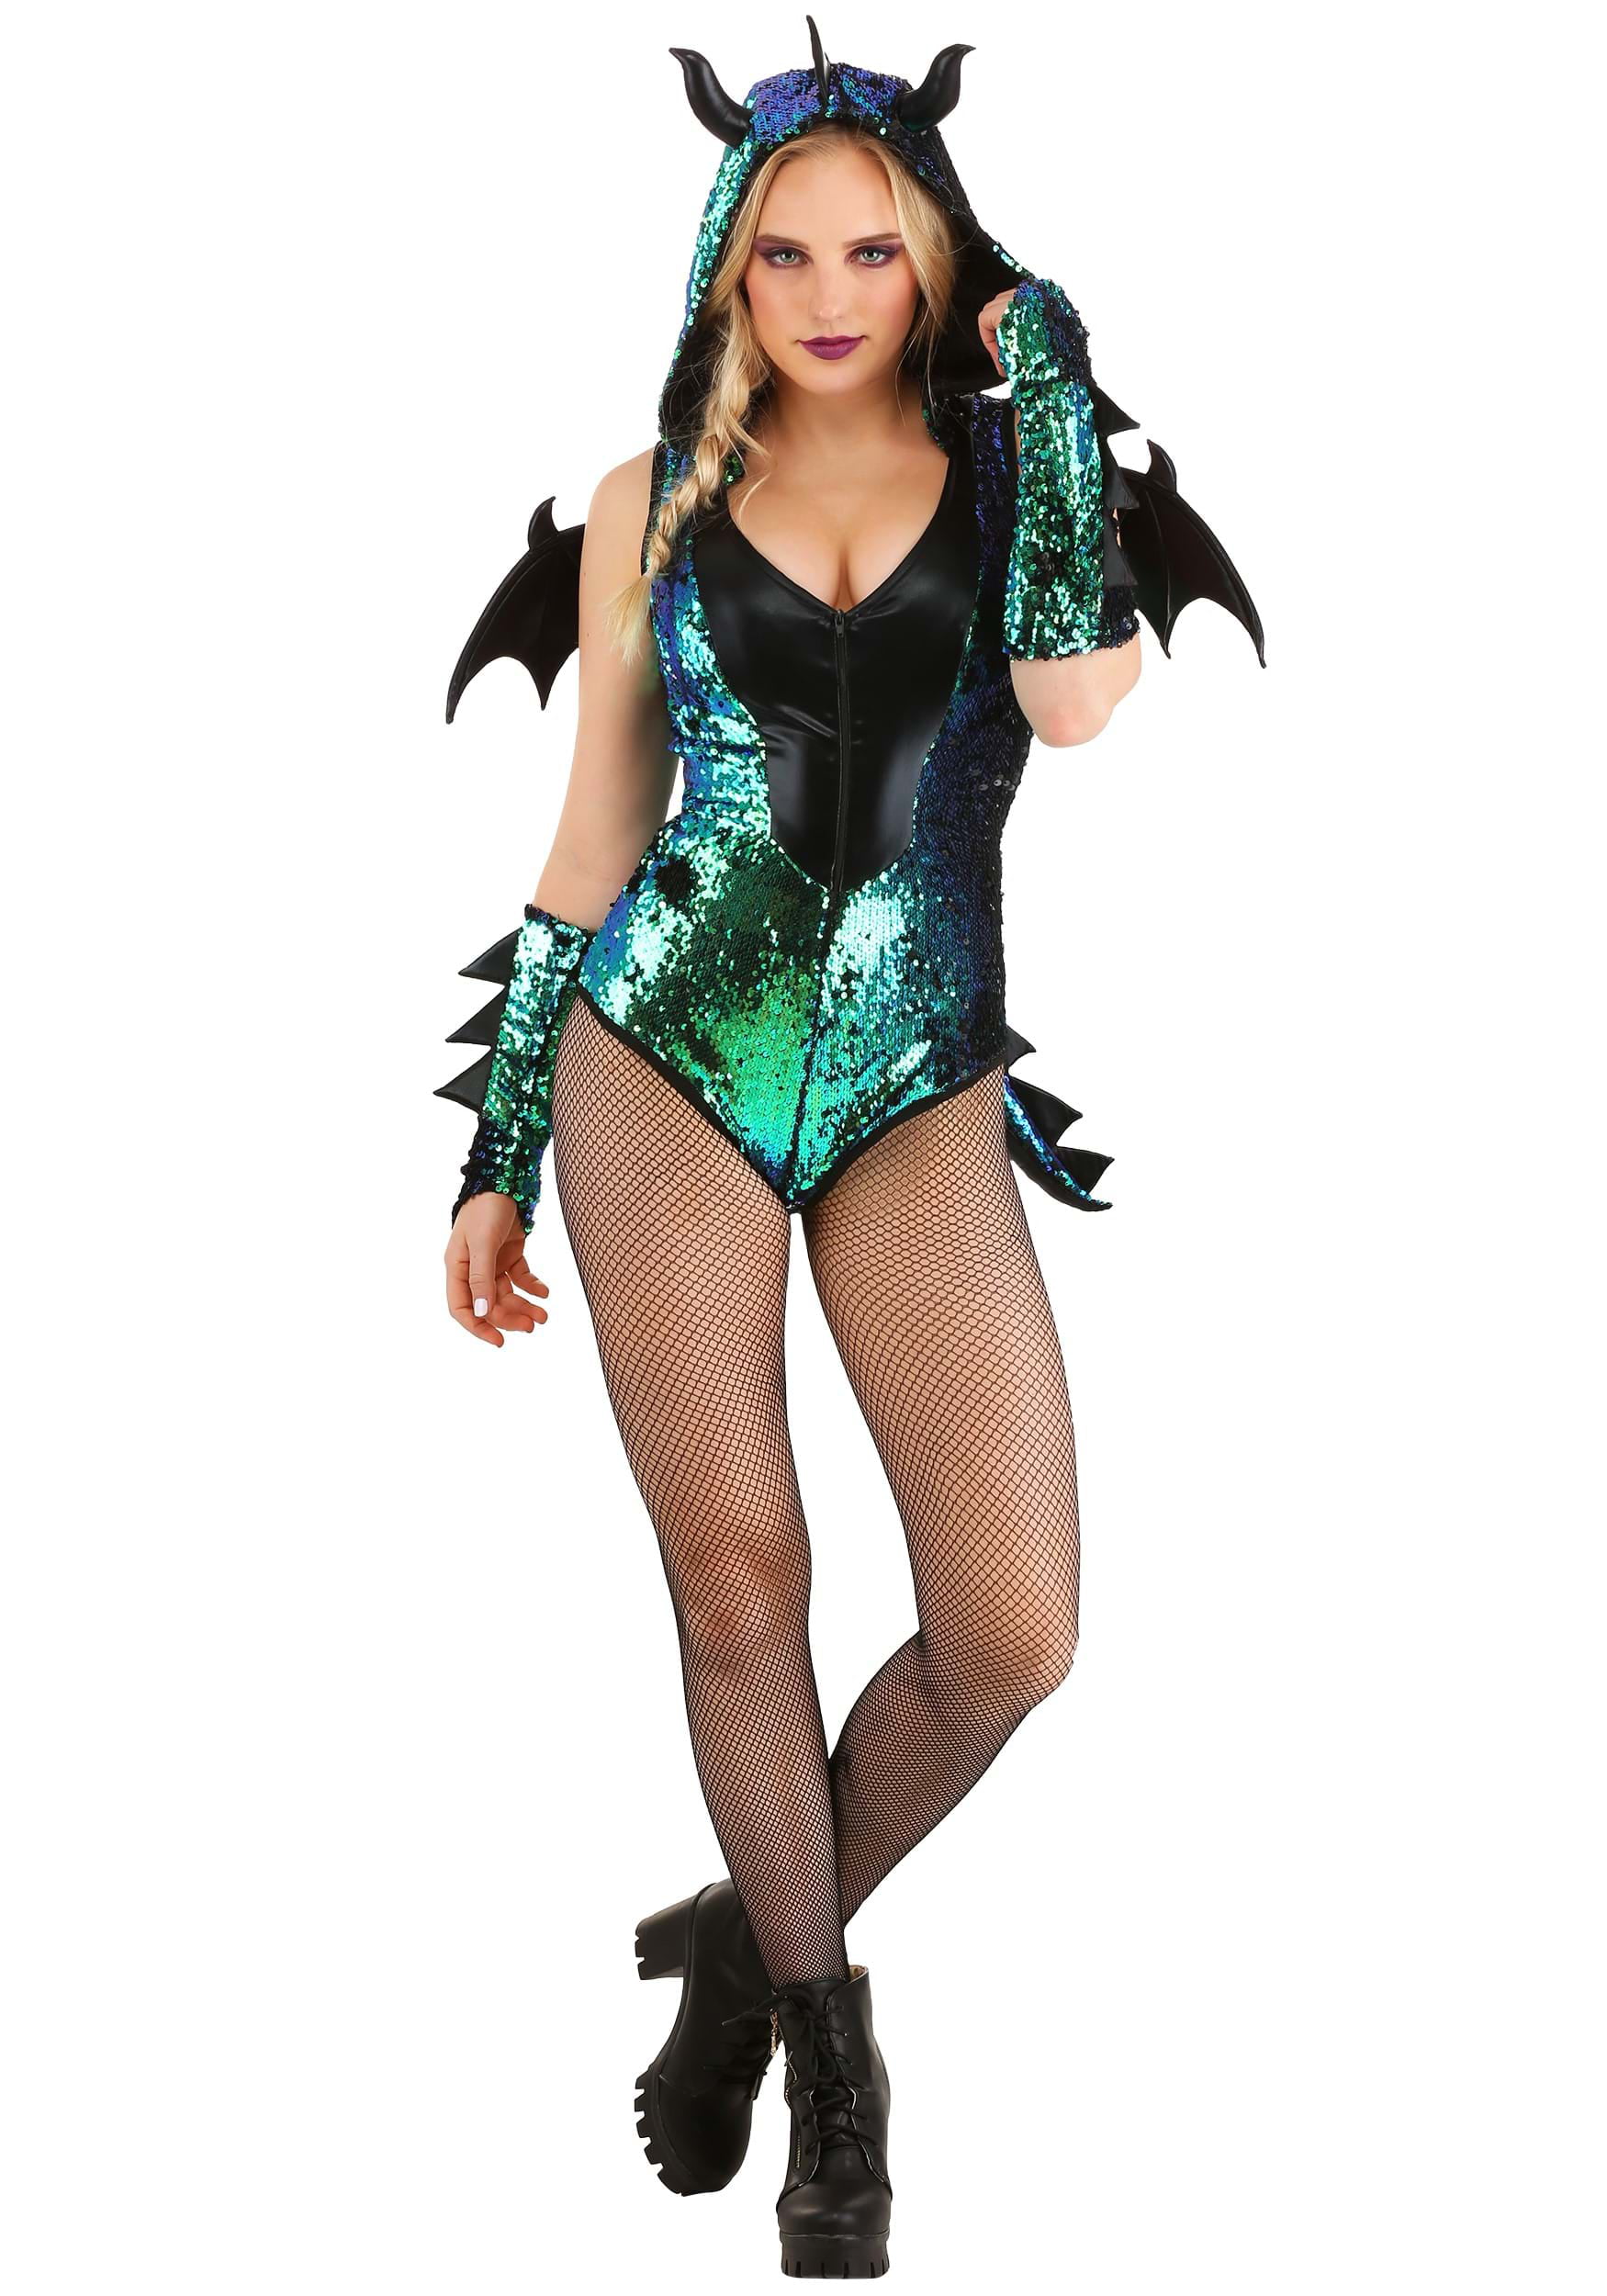 30 Gold Dragon Scale Leggings Women Adult Halloween Costume